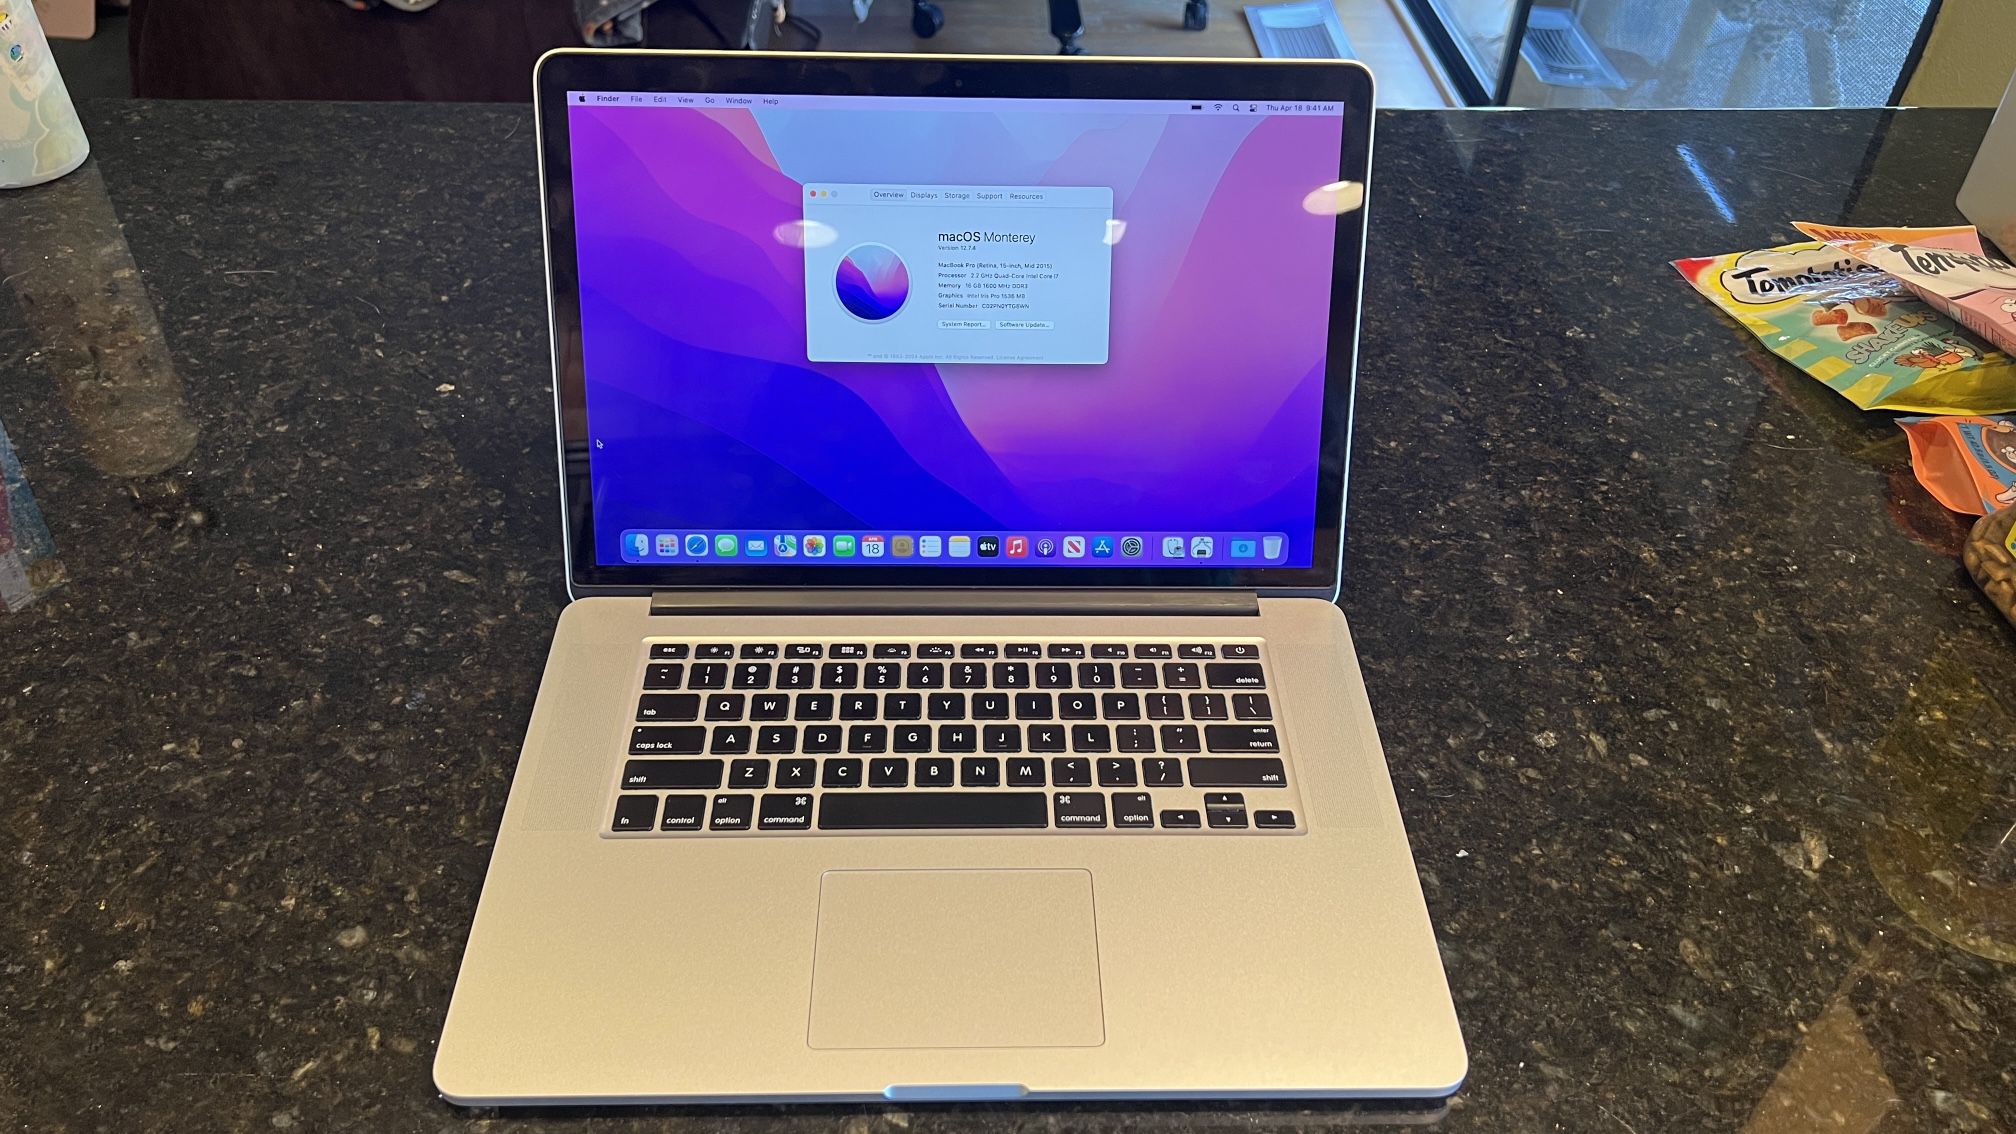 MacBook Pro 15” (mid 2015)